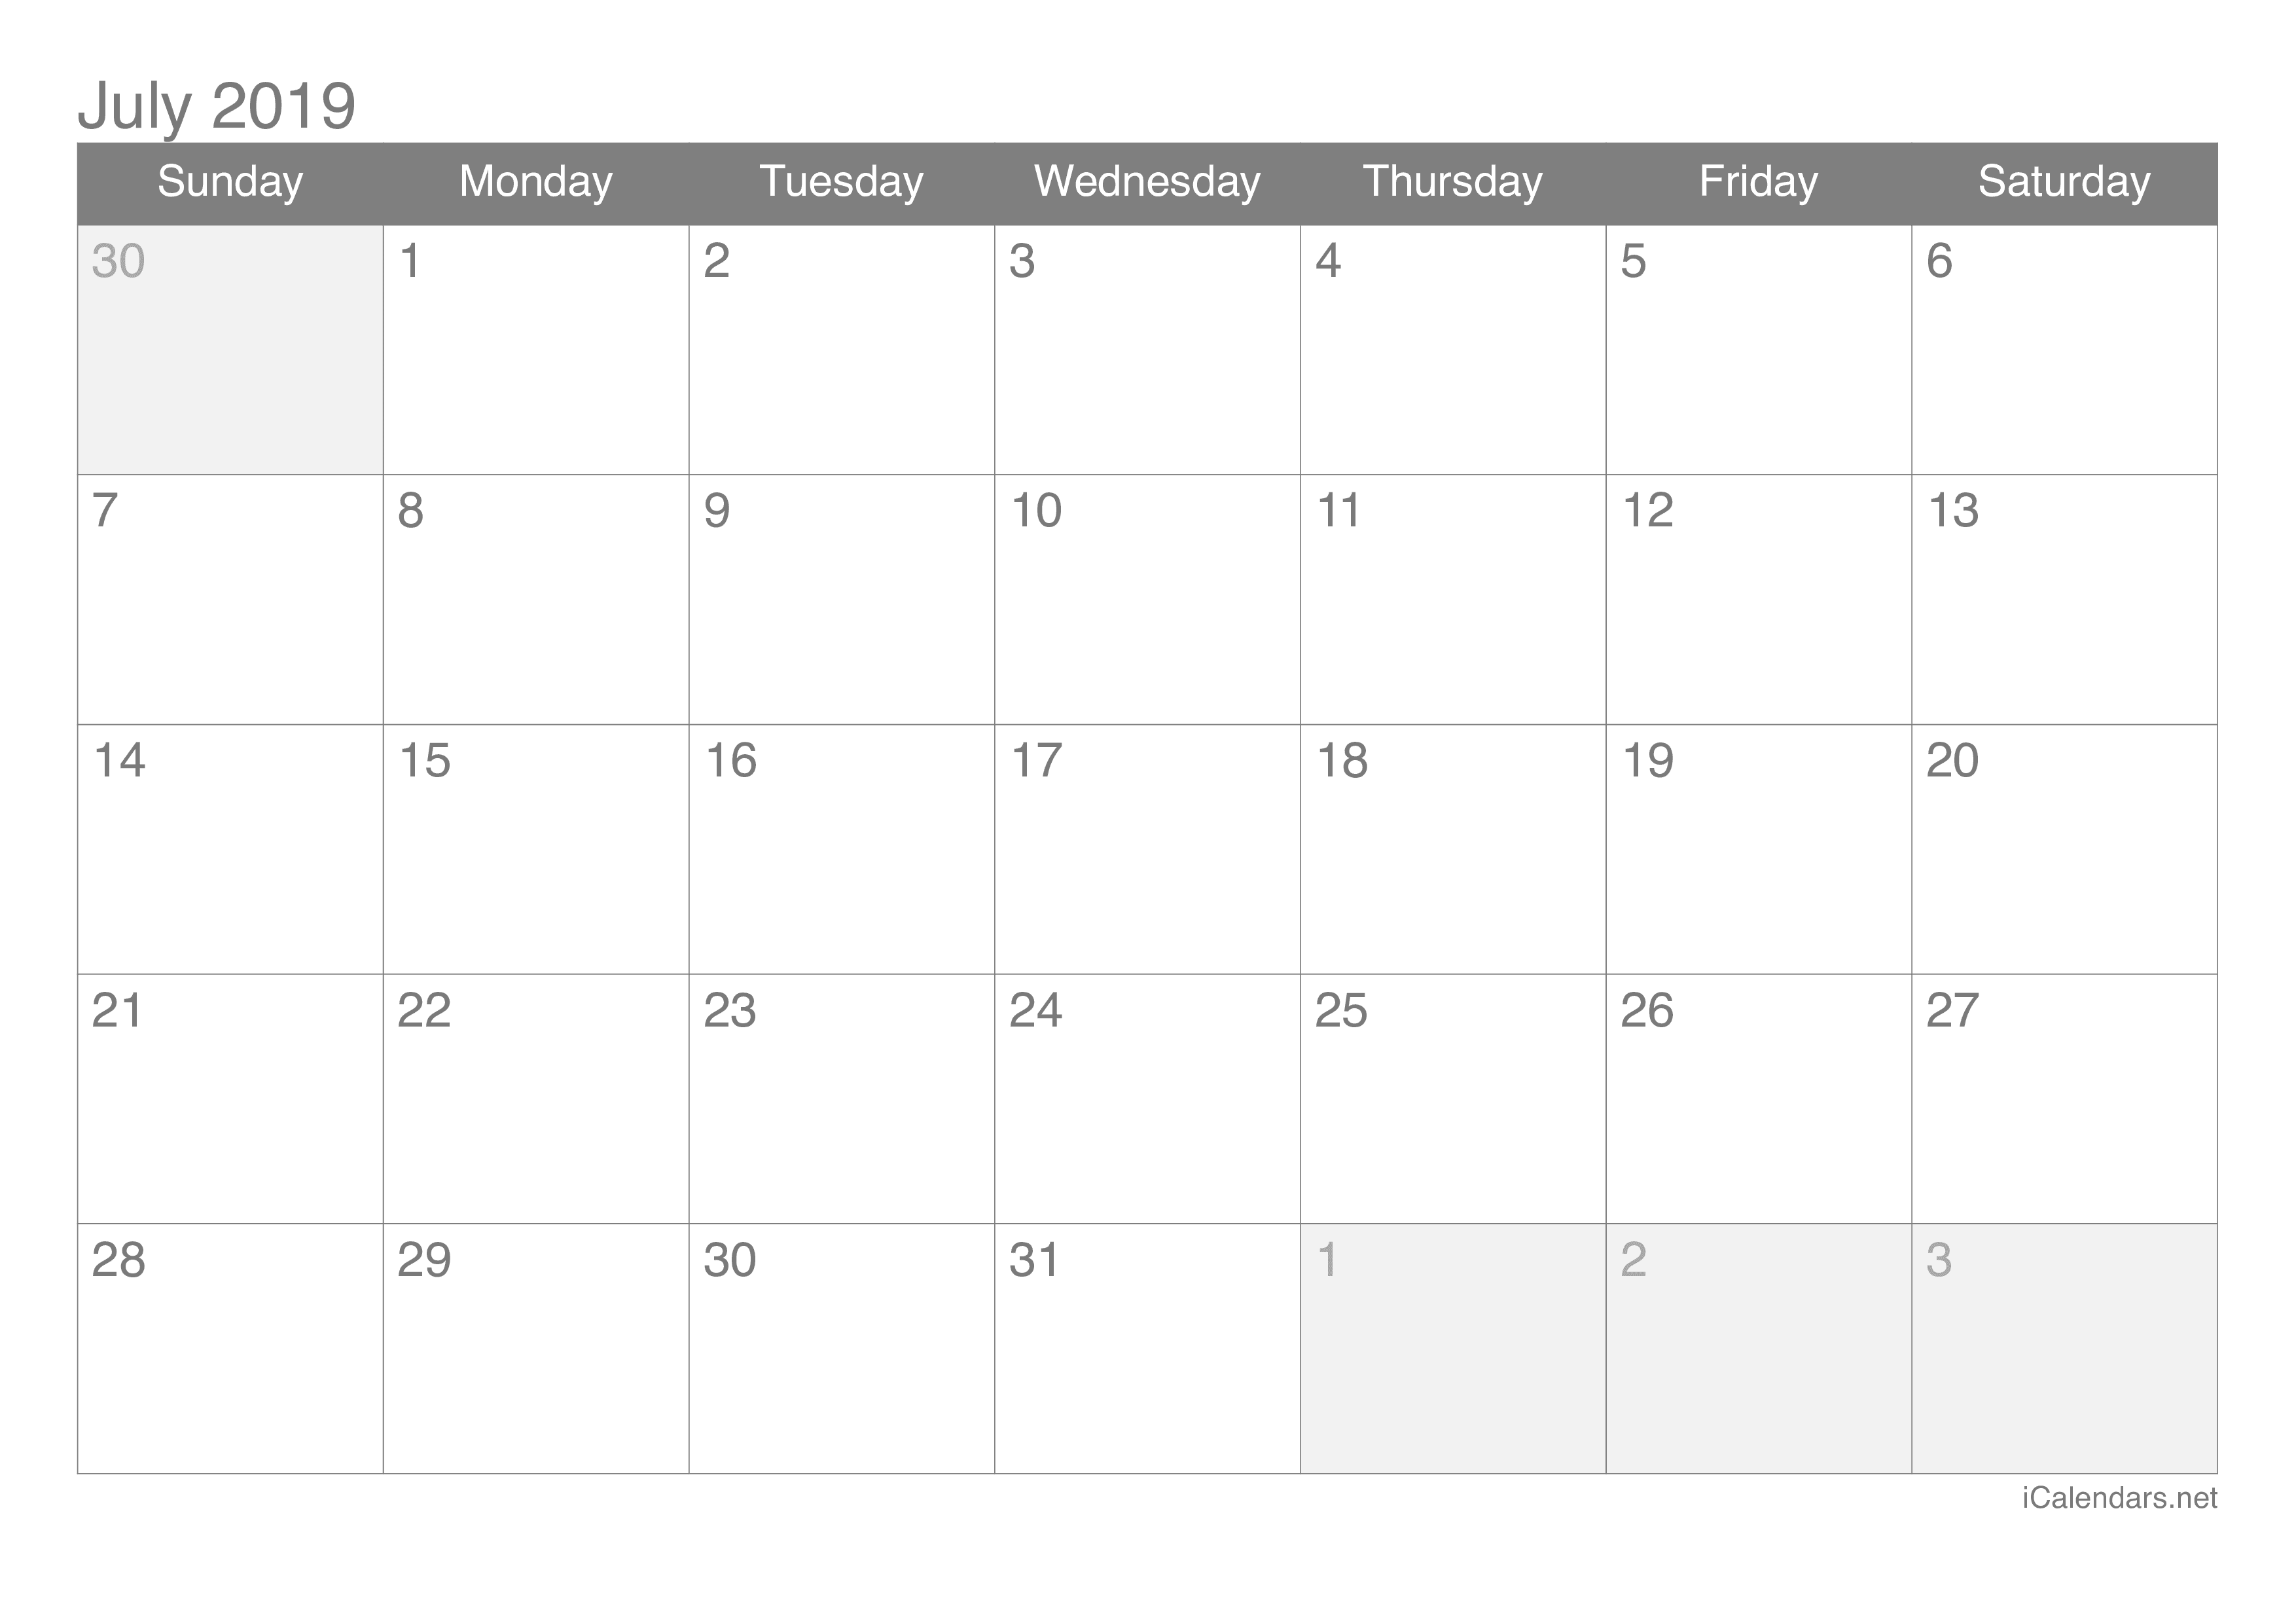 July 2019 Printable Calendar icalendars net